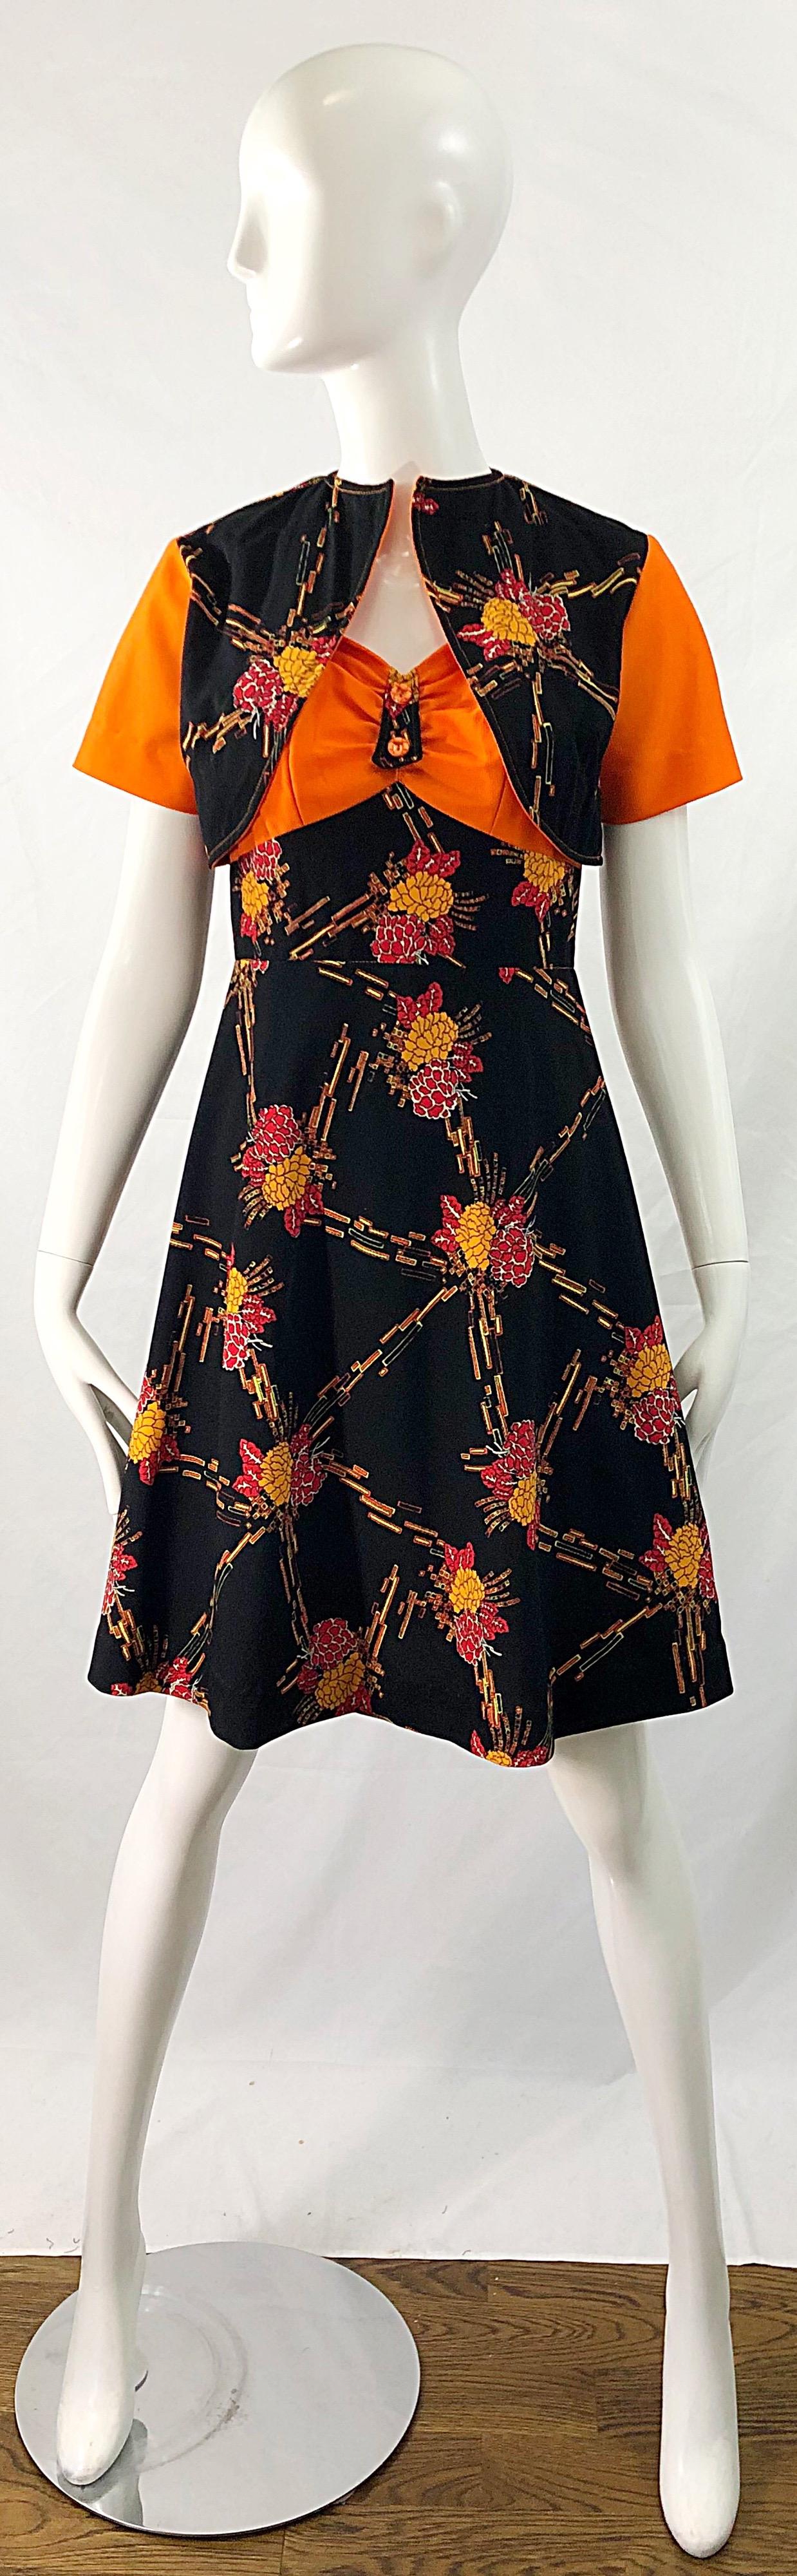 1970s Autumnal Digital Floral Print Knit Vintage 70s A Line Dress + Bolero Top For Sale 10